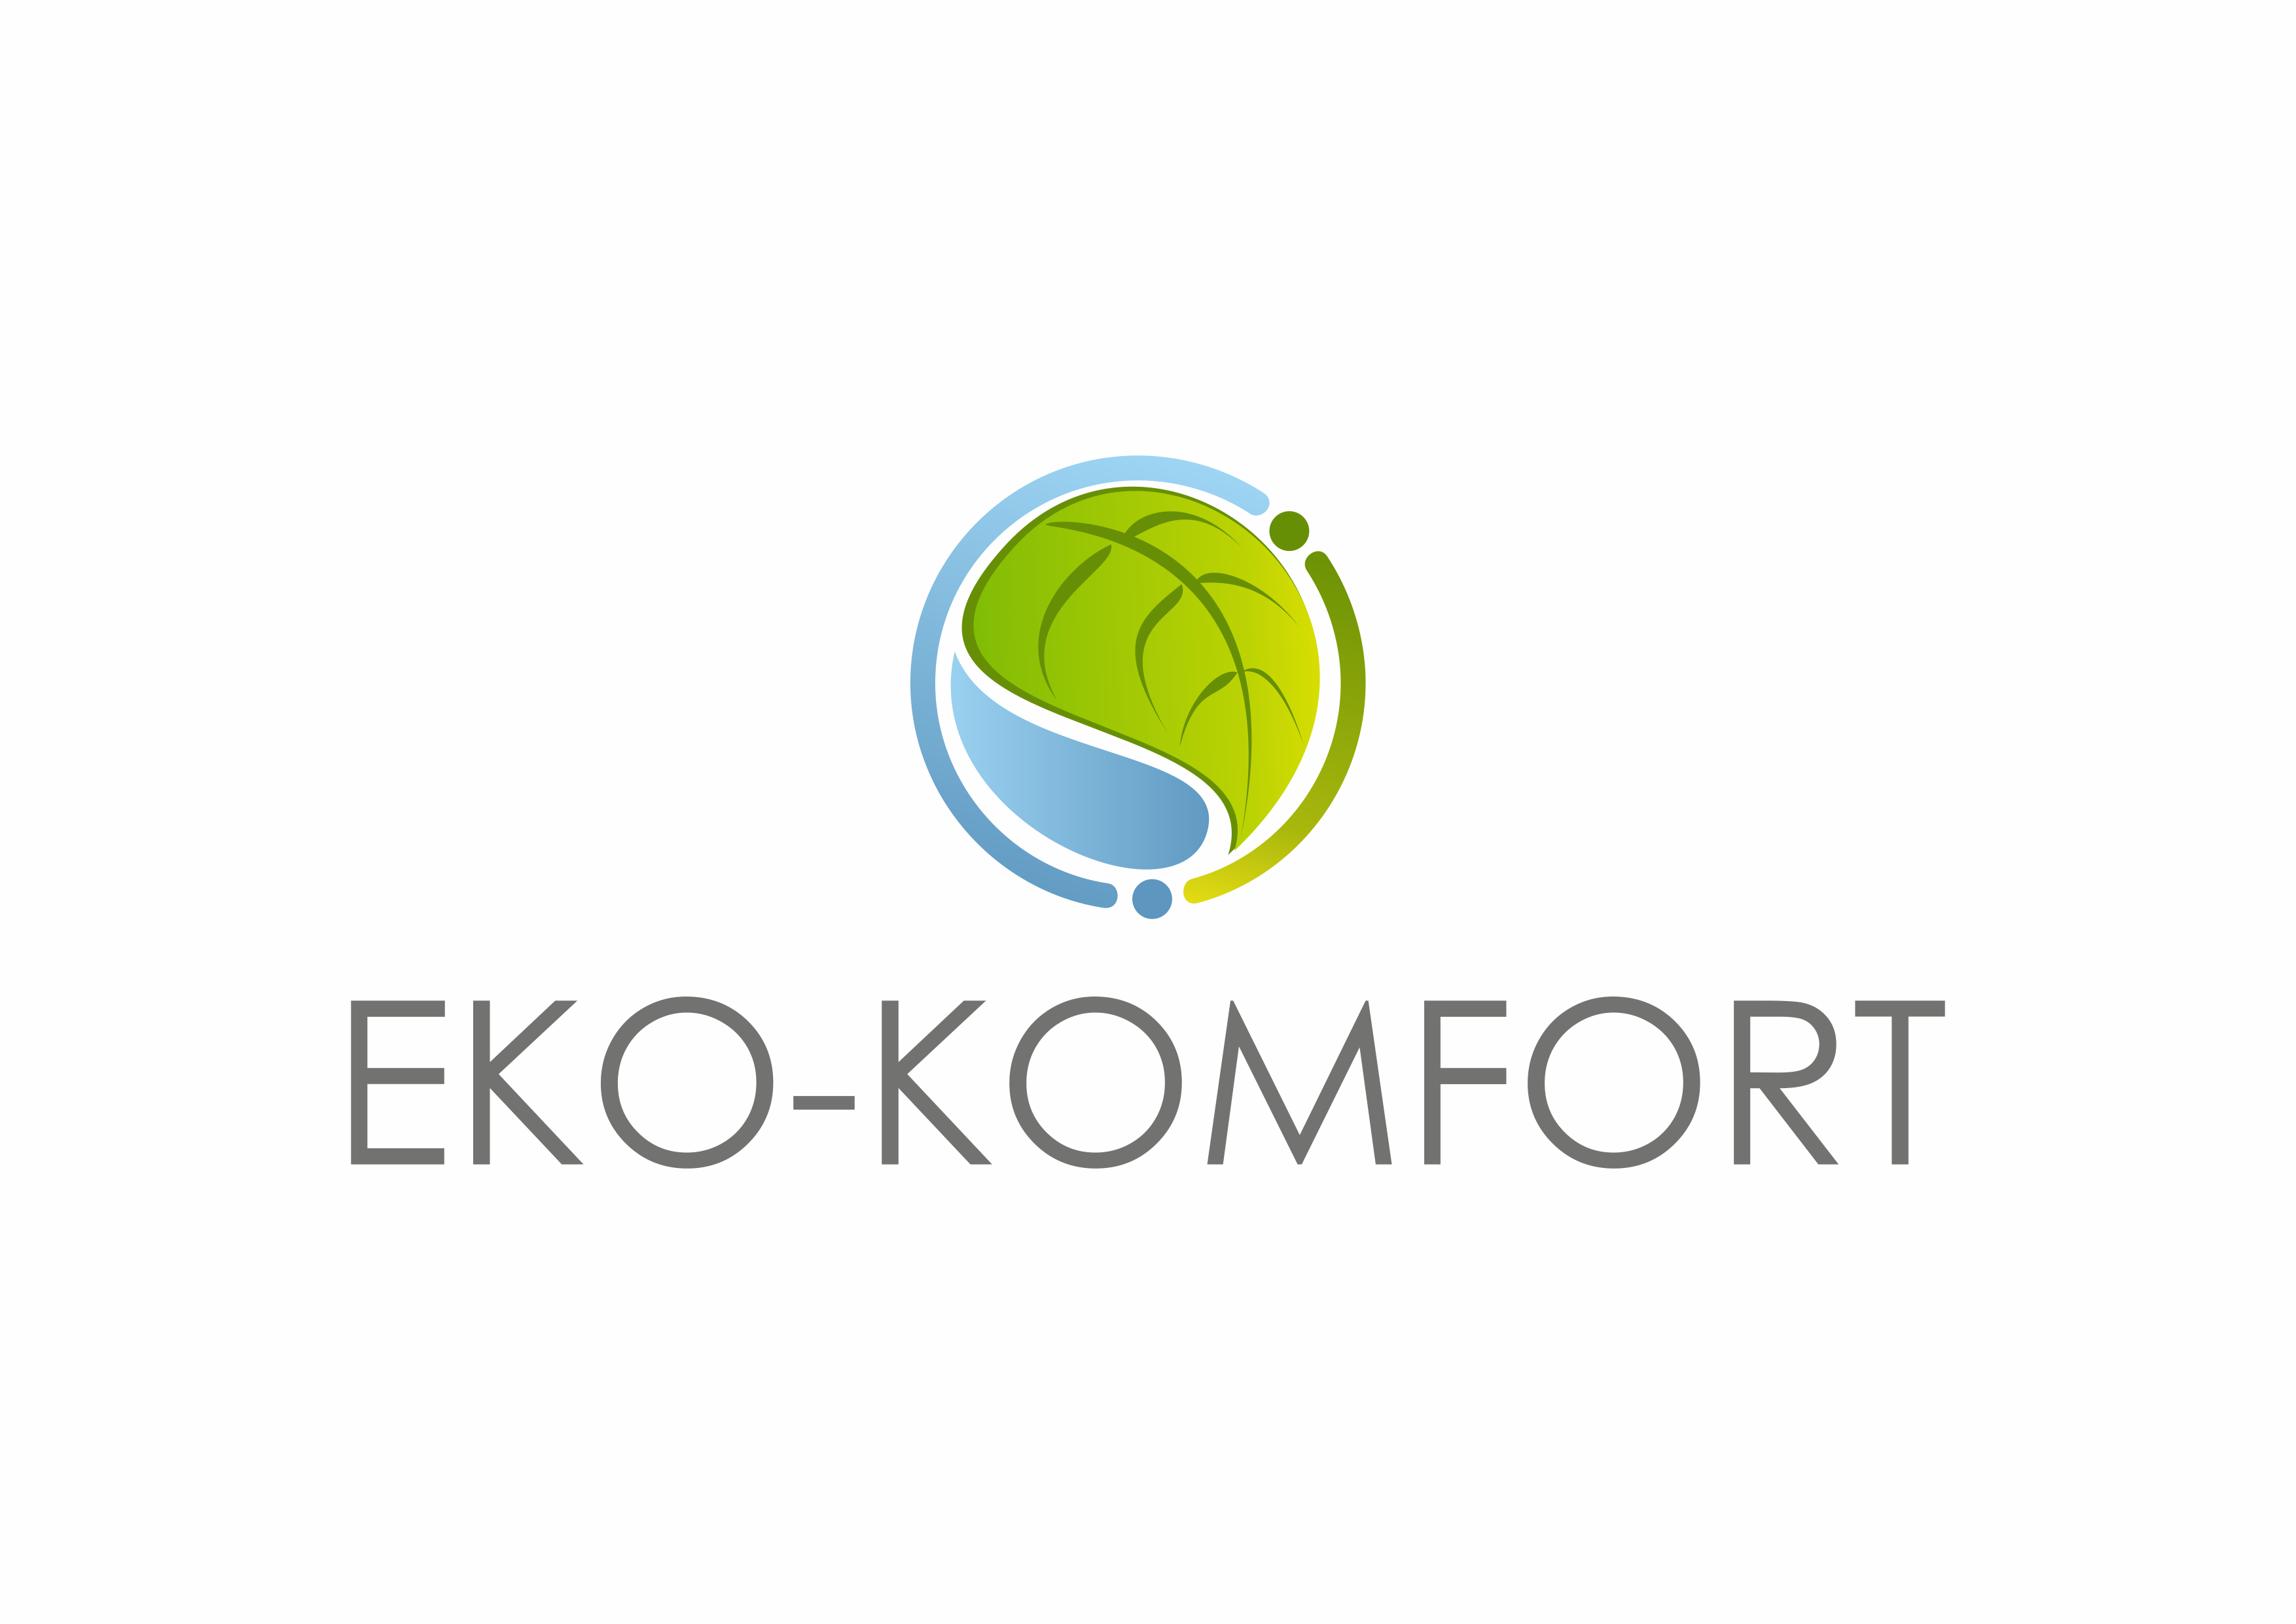 Eko-komfort